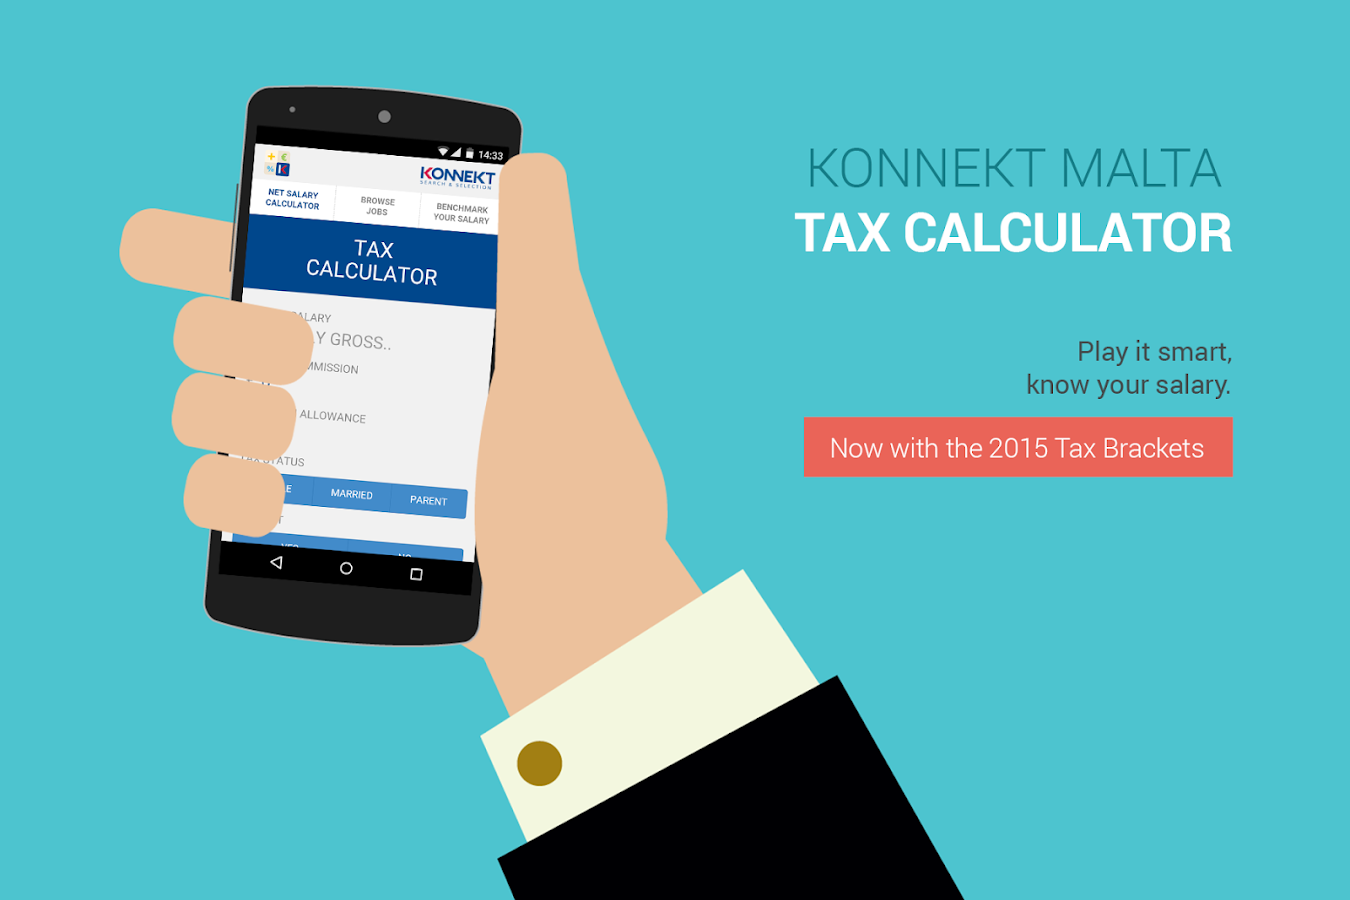 konnekt-malta-tax-calculator-android-apps-on-google-play